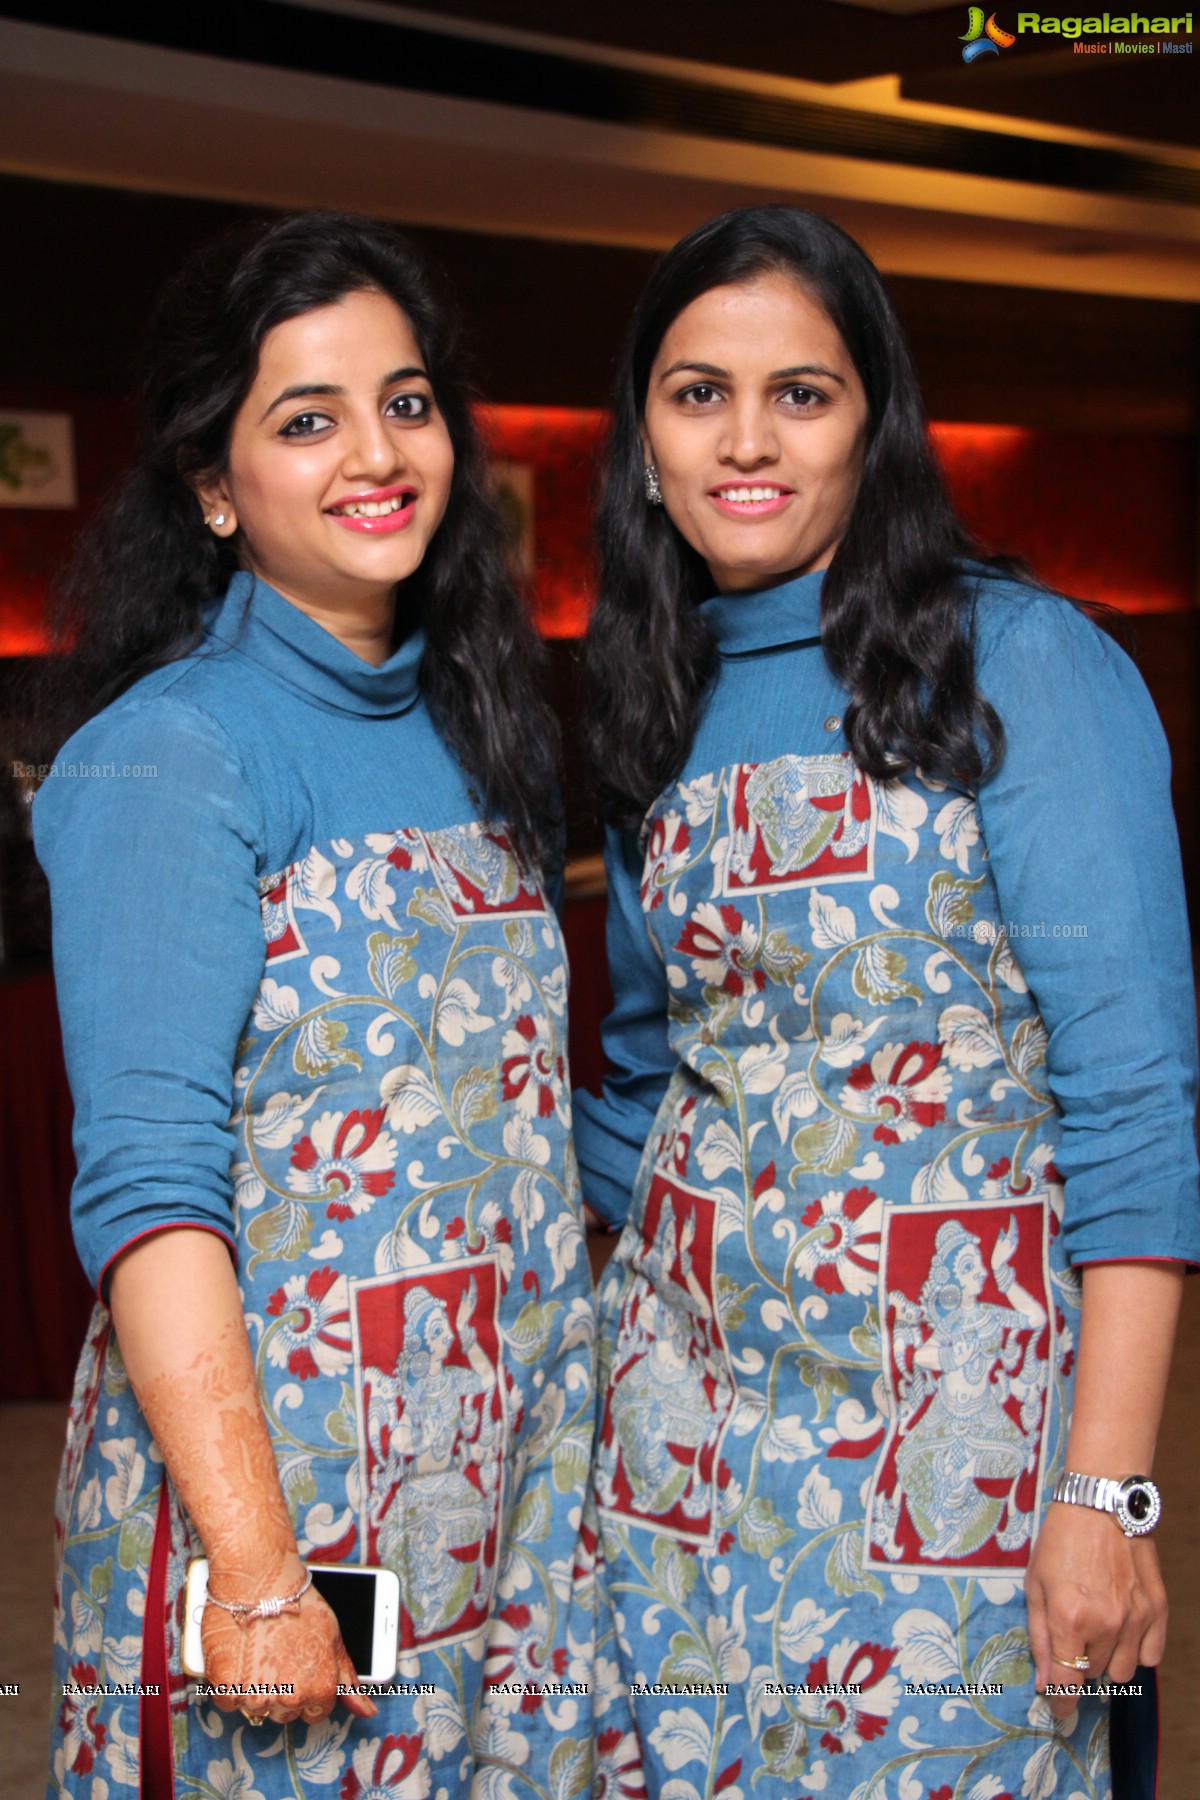 Cookery Show by Samanvay Ladies Club at Basil, Hyderabad